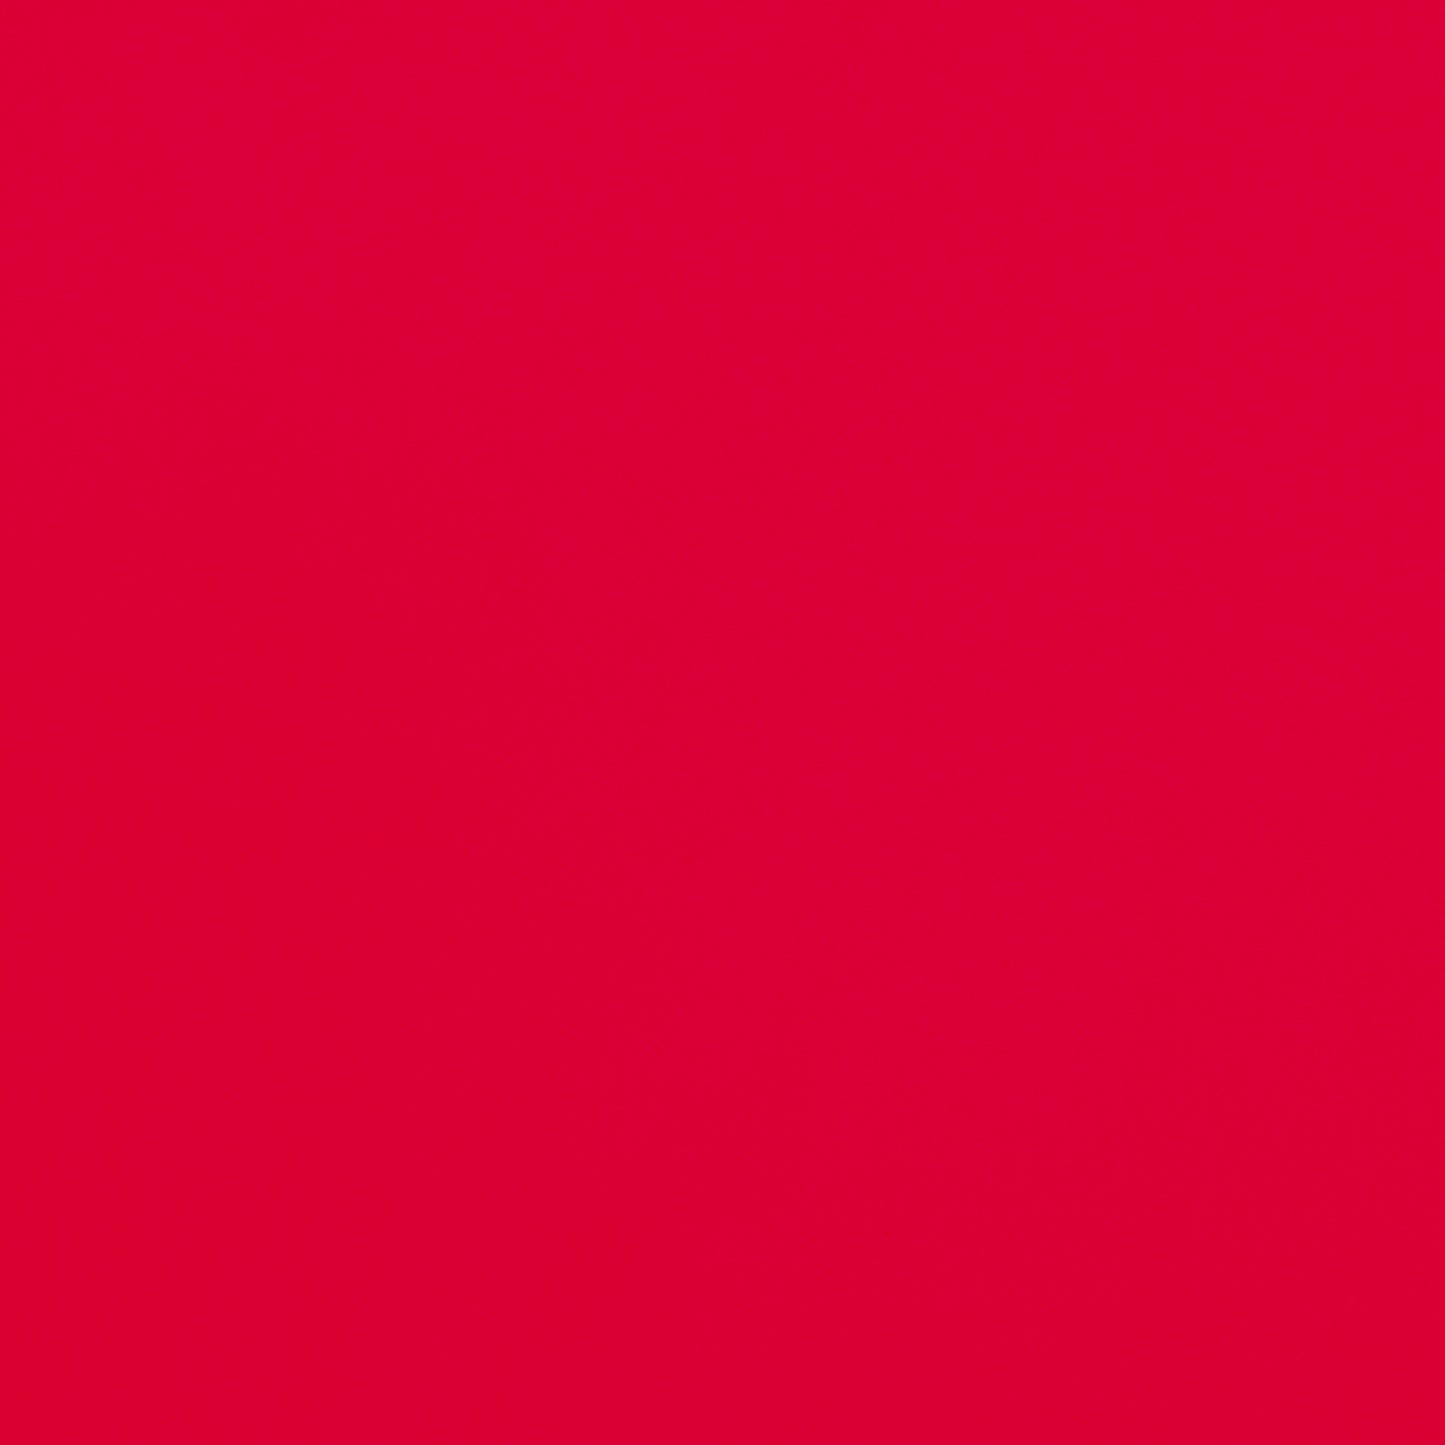 Pongee Lining Red #30 150cm